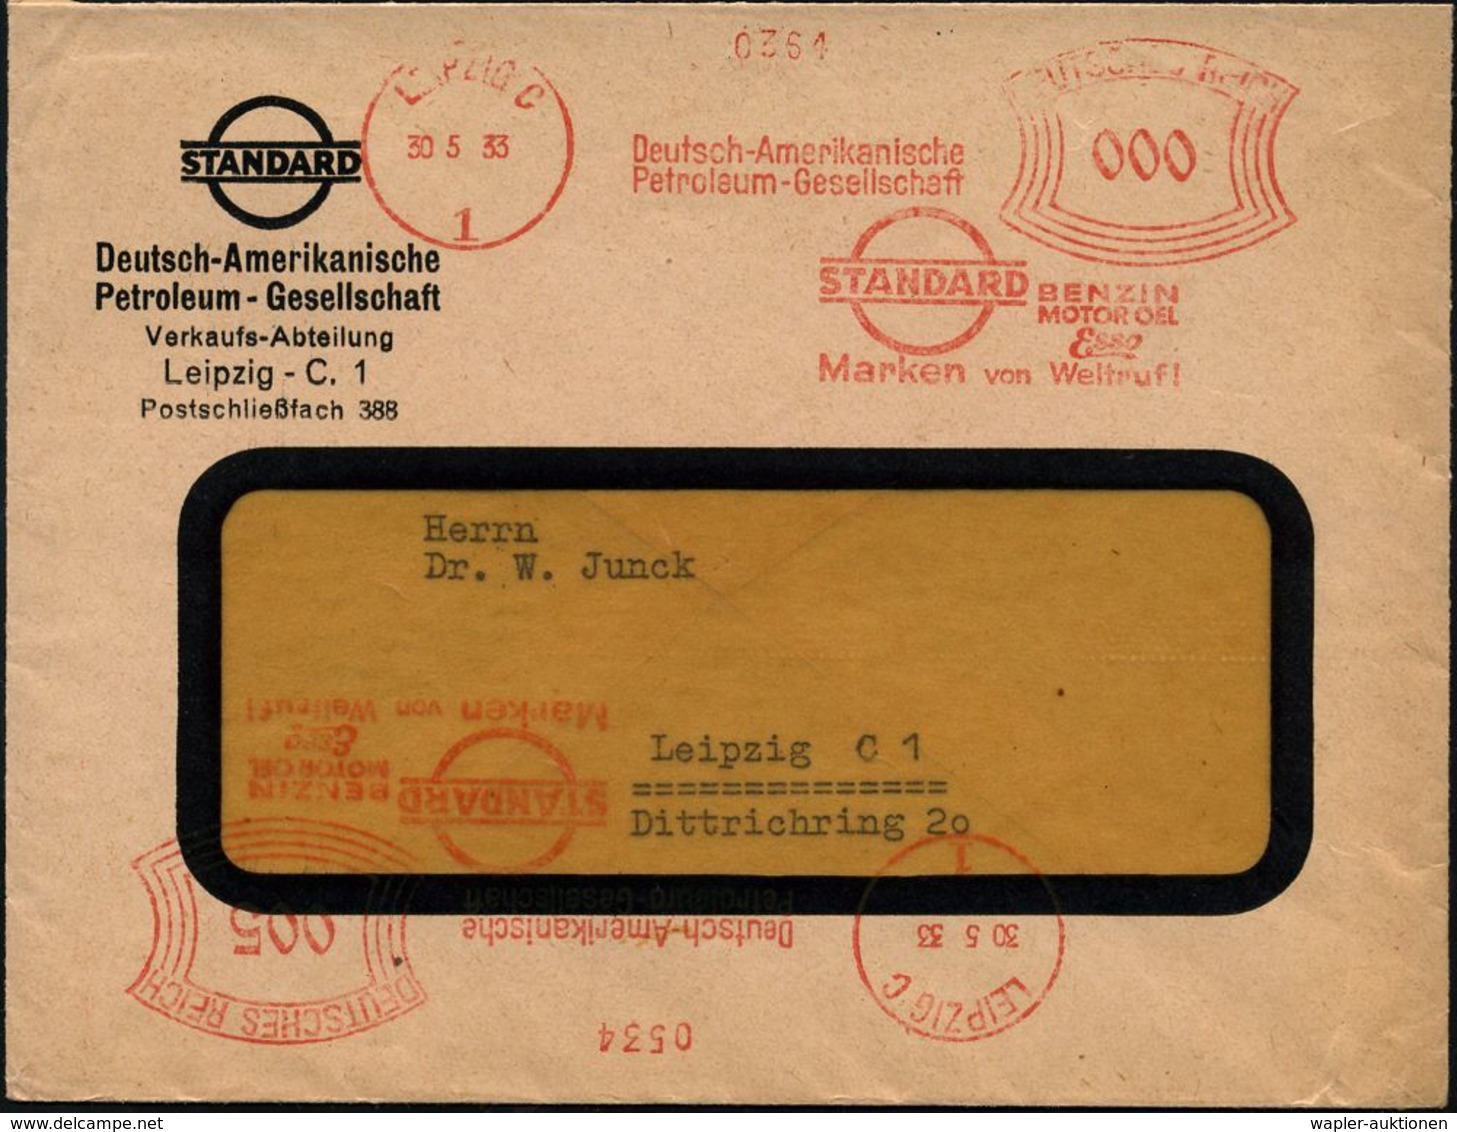 LEIPZIG C/ 1/ Deutsch-Amerikanische/ Petroleum-Ges./ STANDARD/ BENZIN/ MOTOR OEL/ Esso.. 1933 (30.5.) AFS 000 + 005 Pf.  - Pétrole